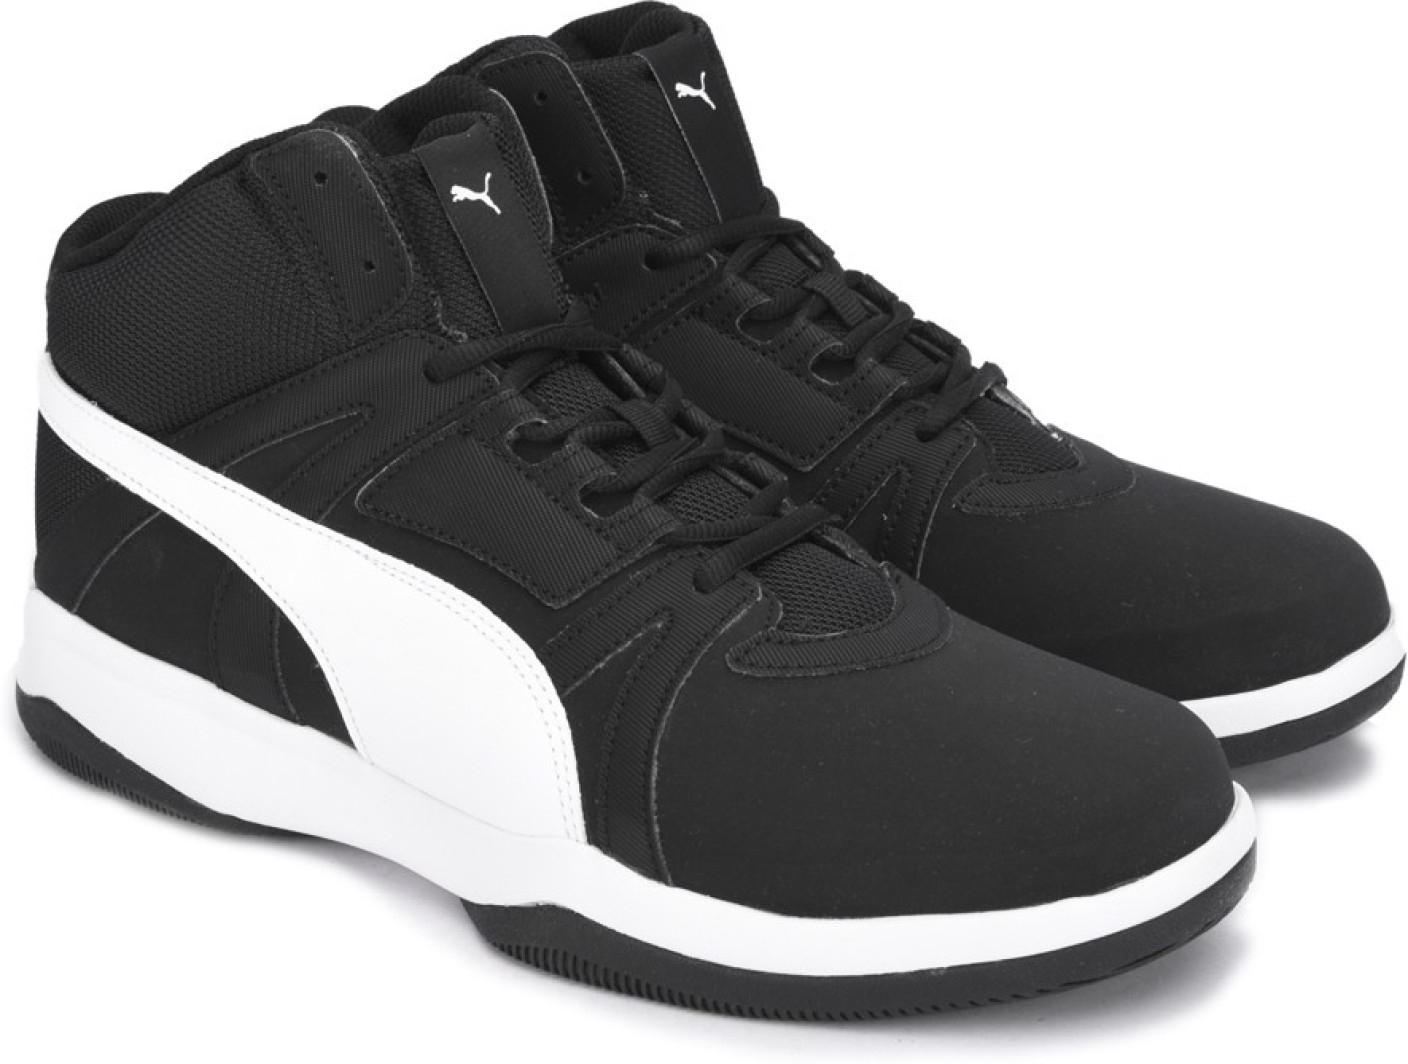 Puma Rebound Street Evo SL IDP Sneakers For Men - Buy Puma Black-Puma ...